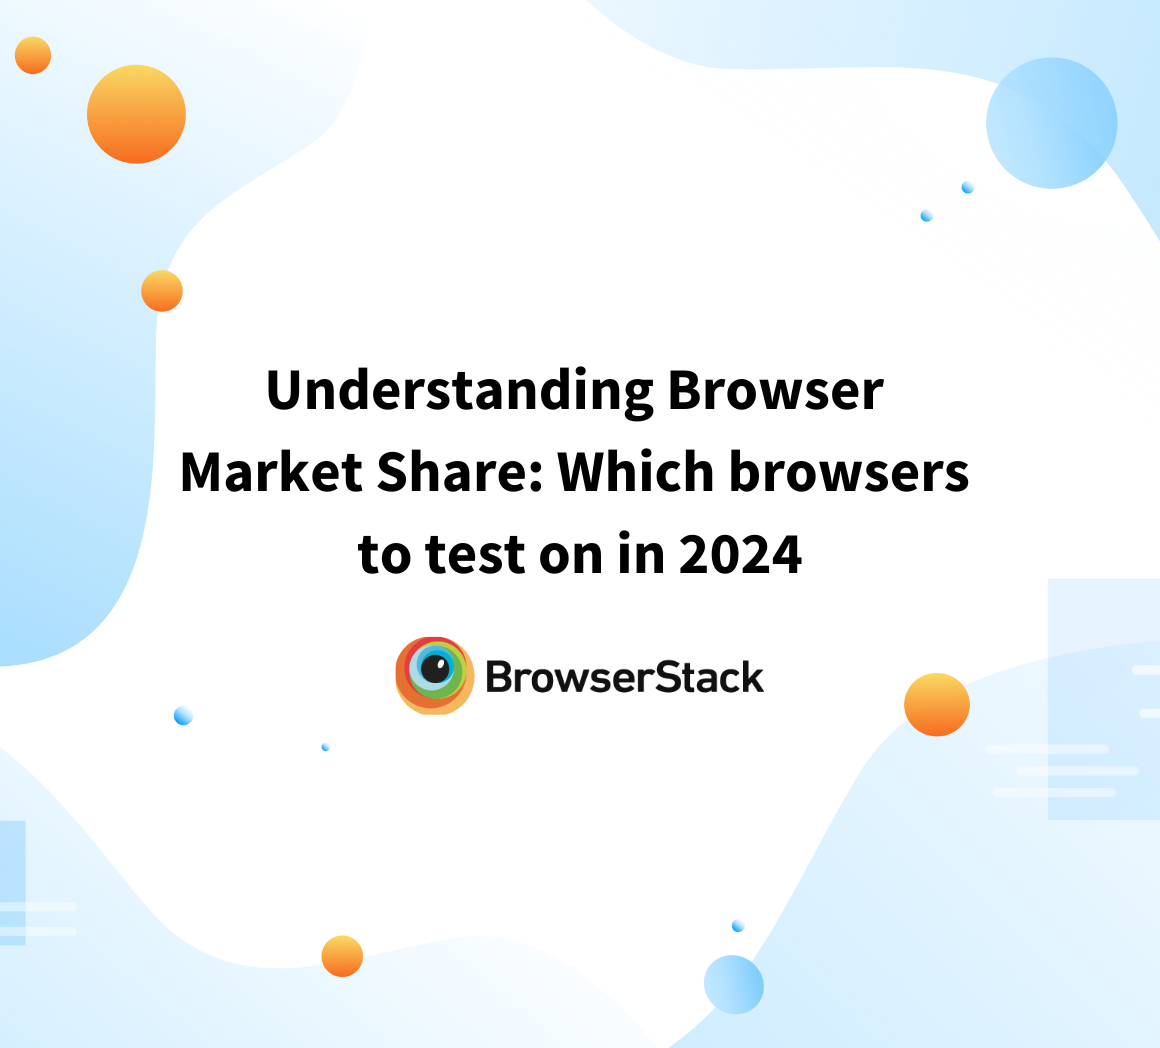 Understanding Browser Market Share in 2024